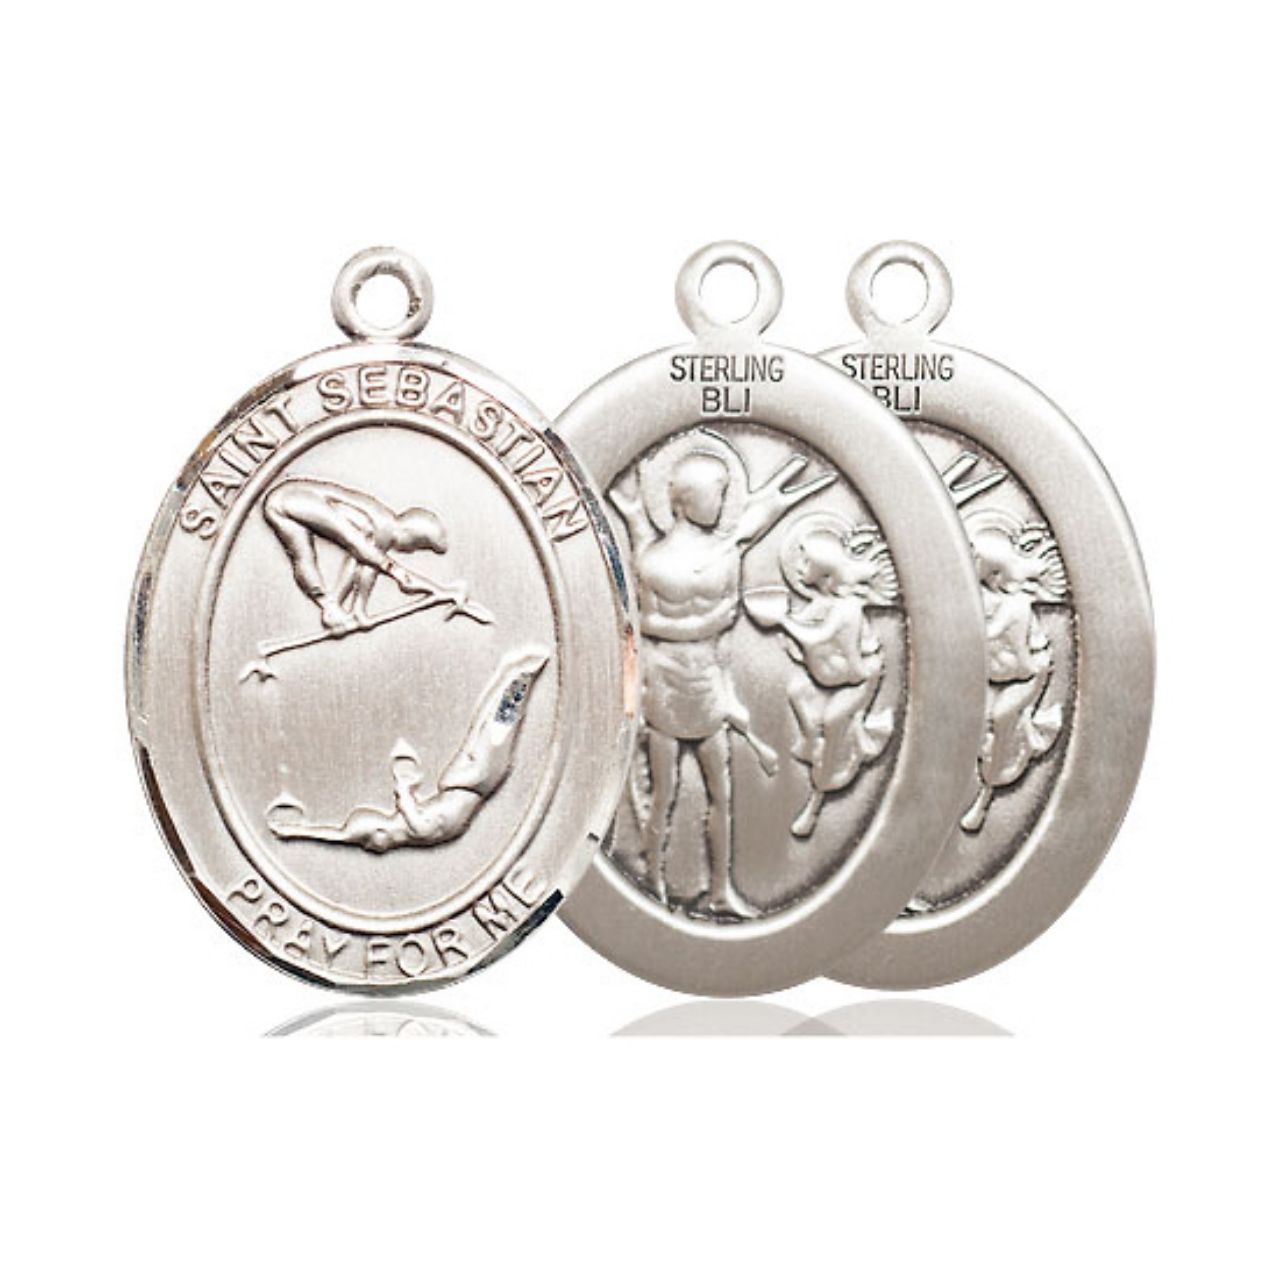 St. Sebastian Gymnastics Medal - Sterling Silver Oval Pendant (2 Sizes)